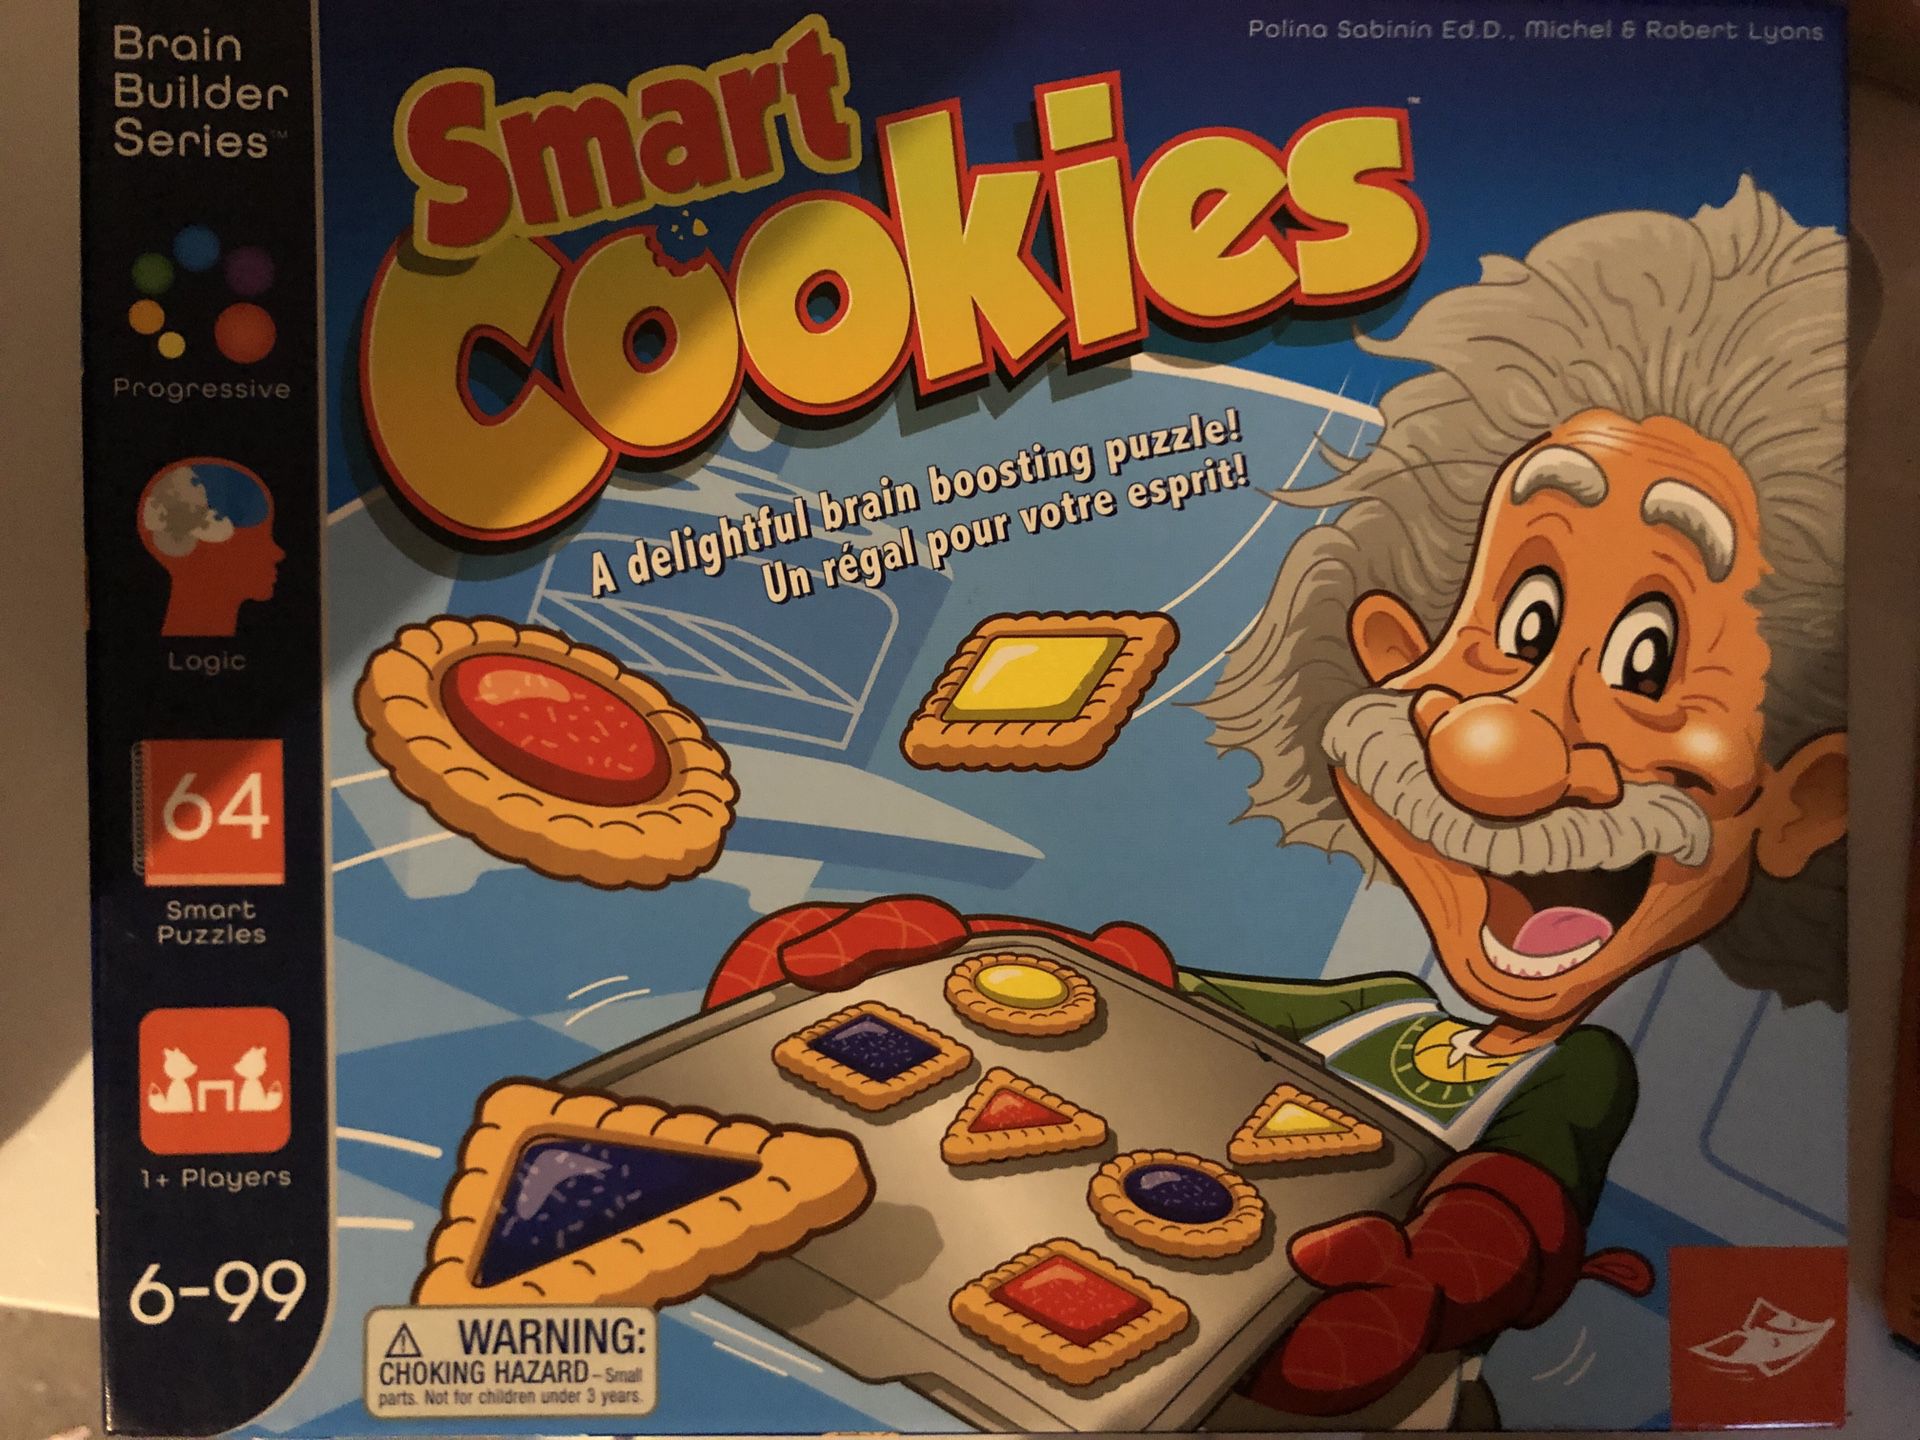 Smart Cookies Game homeschool school teacher games STEM learning